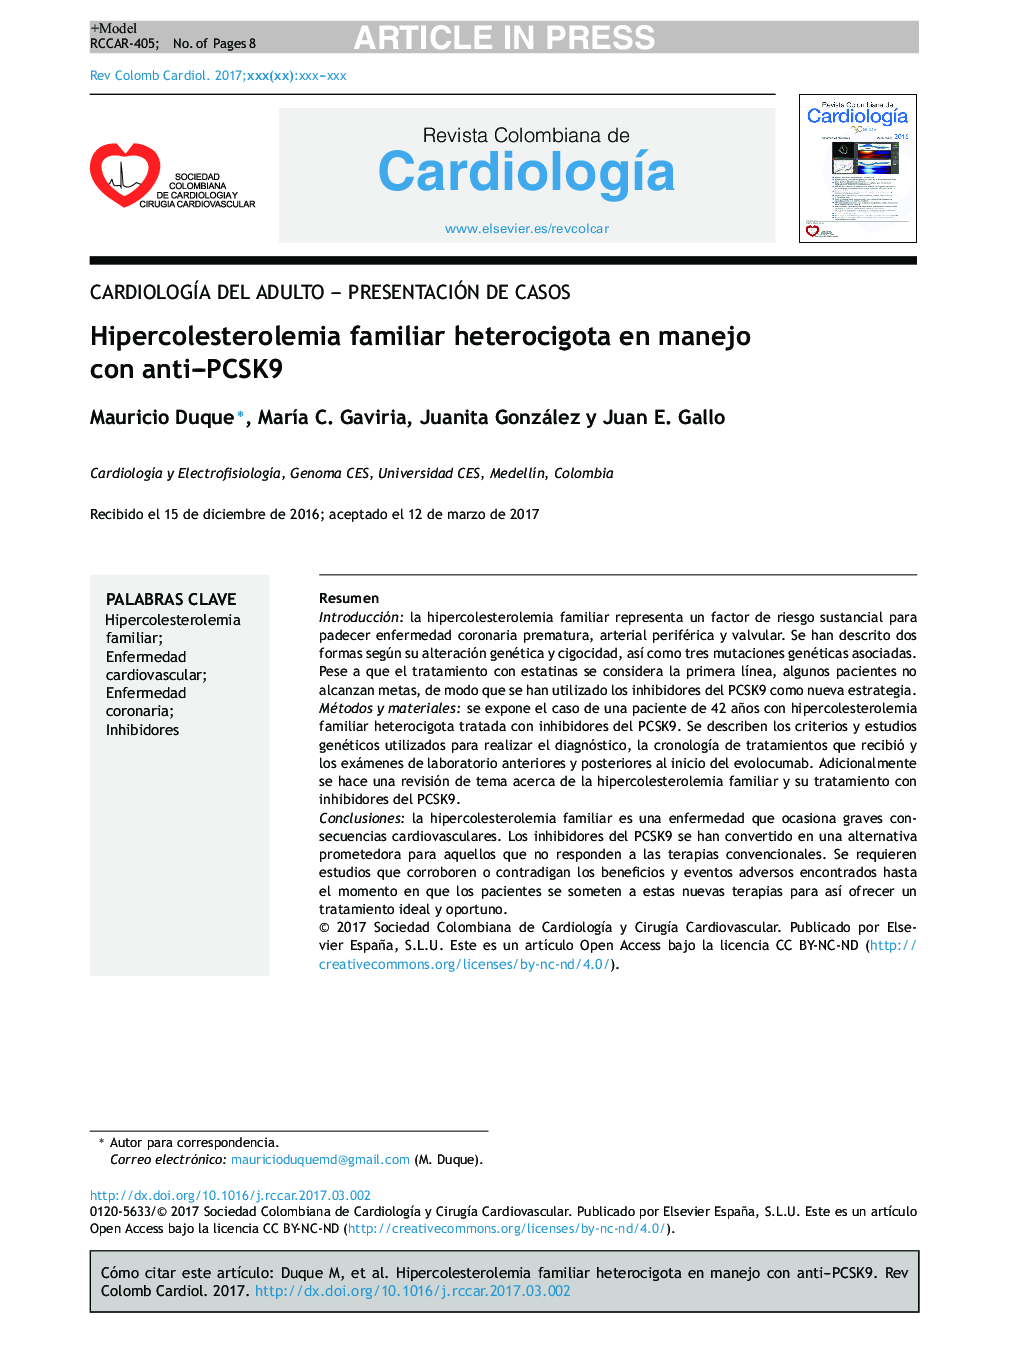 Hipercolesterolemia familiar heterocigota en manejo con anti-PCSK9